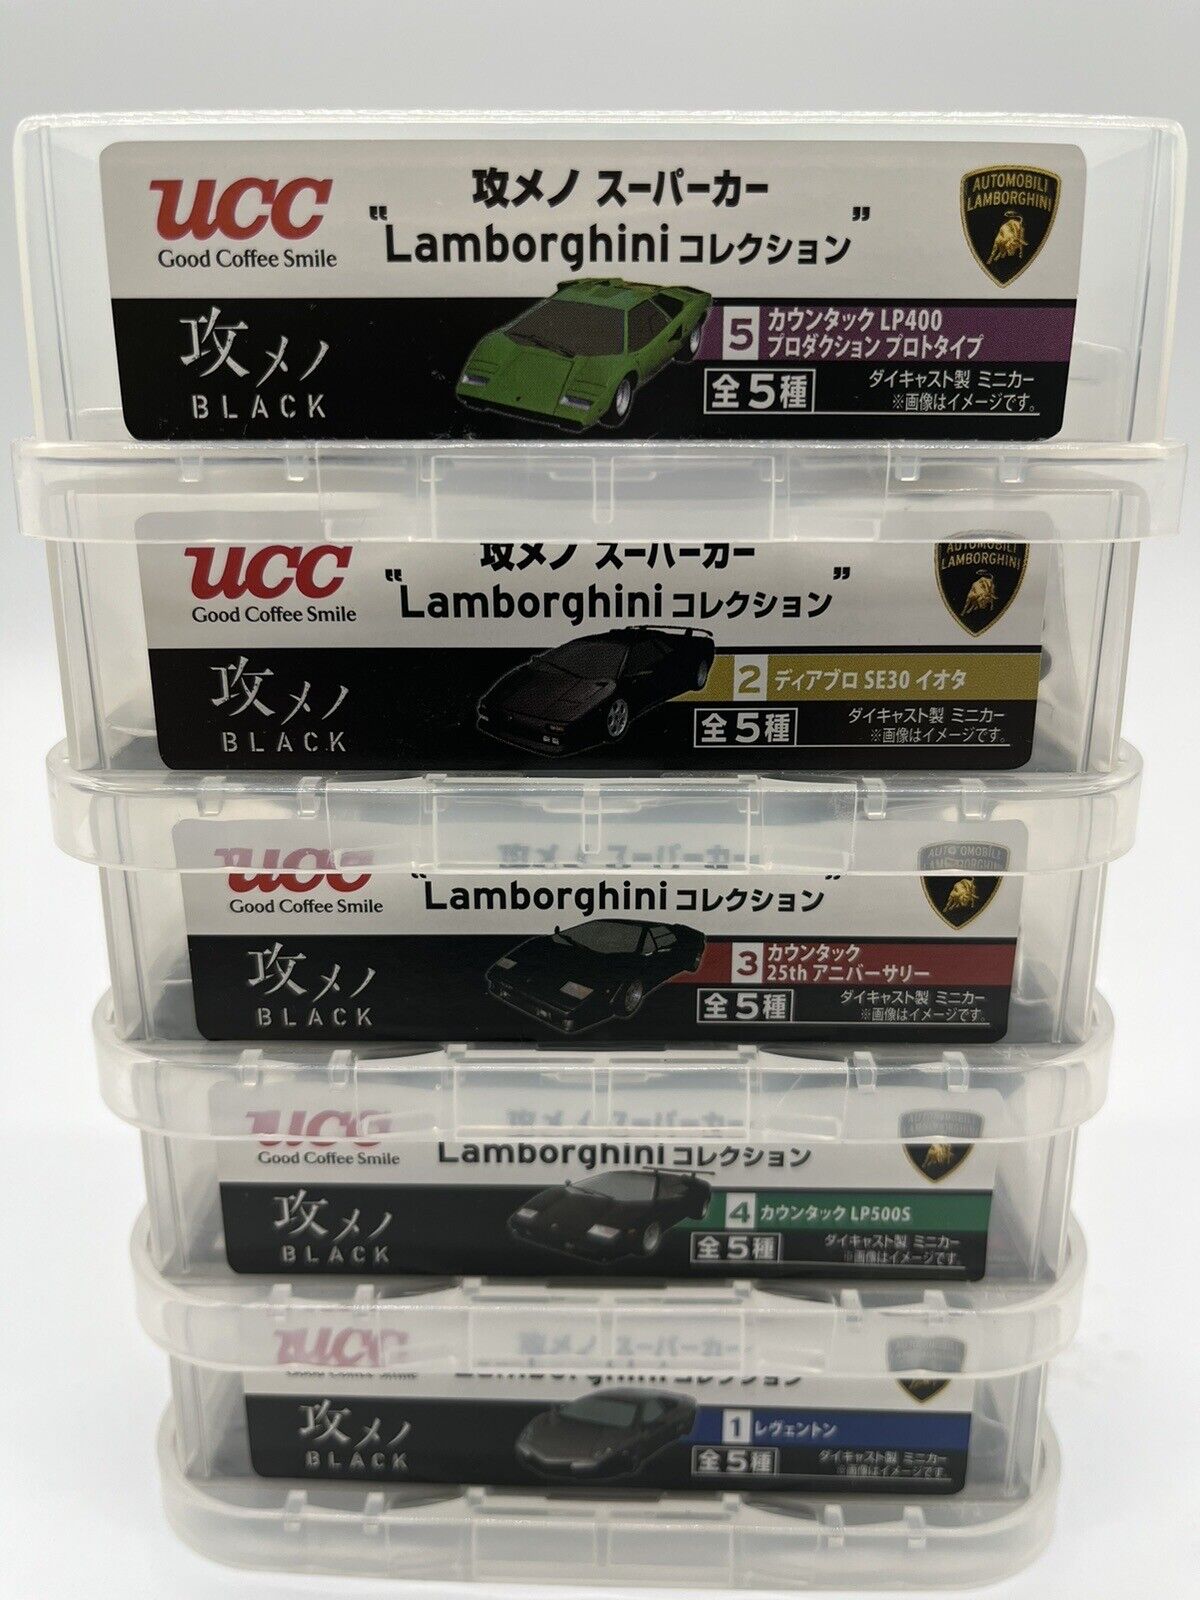 UCC Coffee Aggressive Supercar Lamborghini Collection All 5 Types